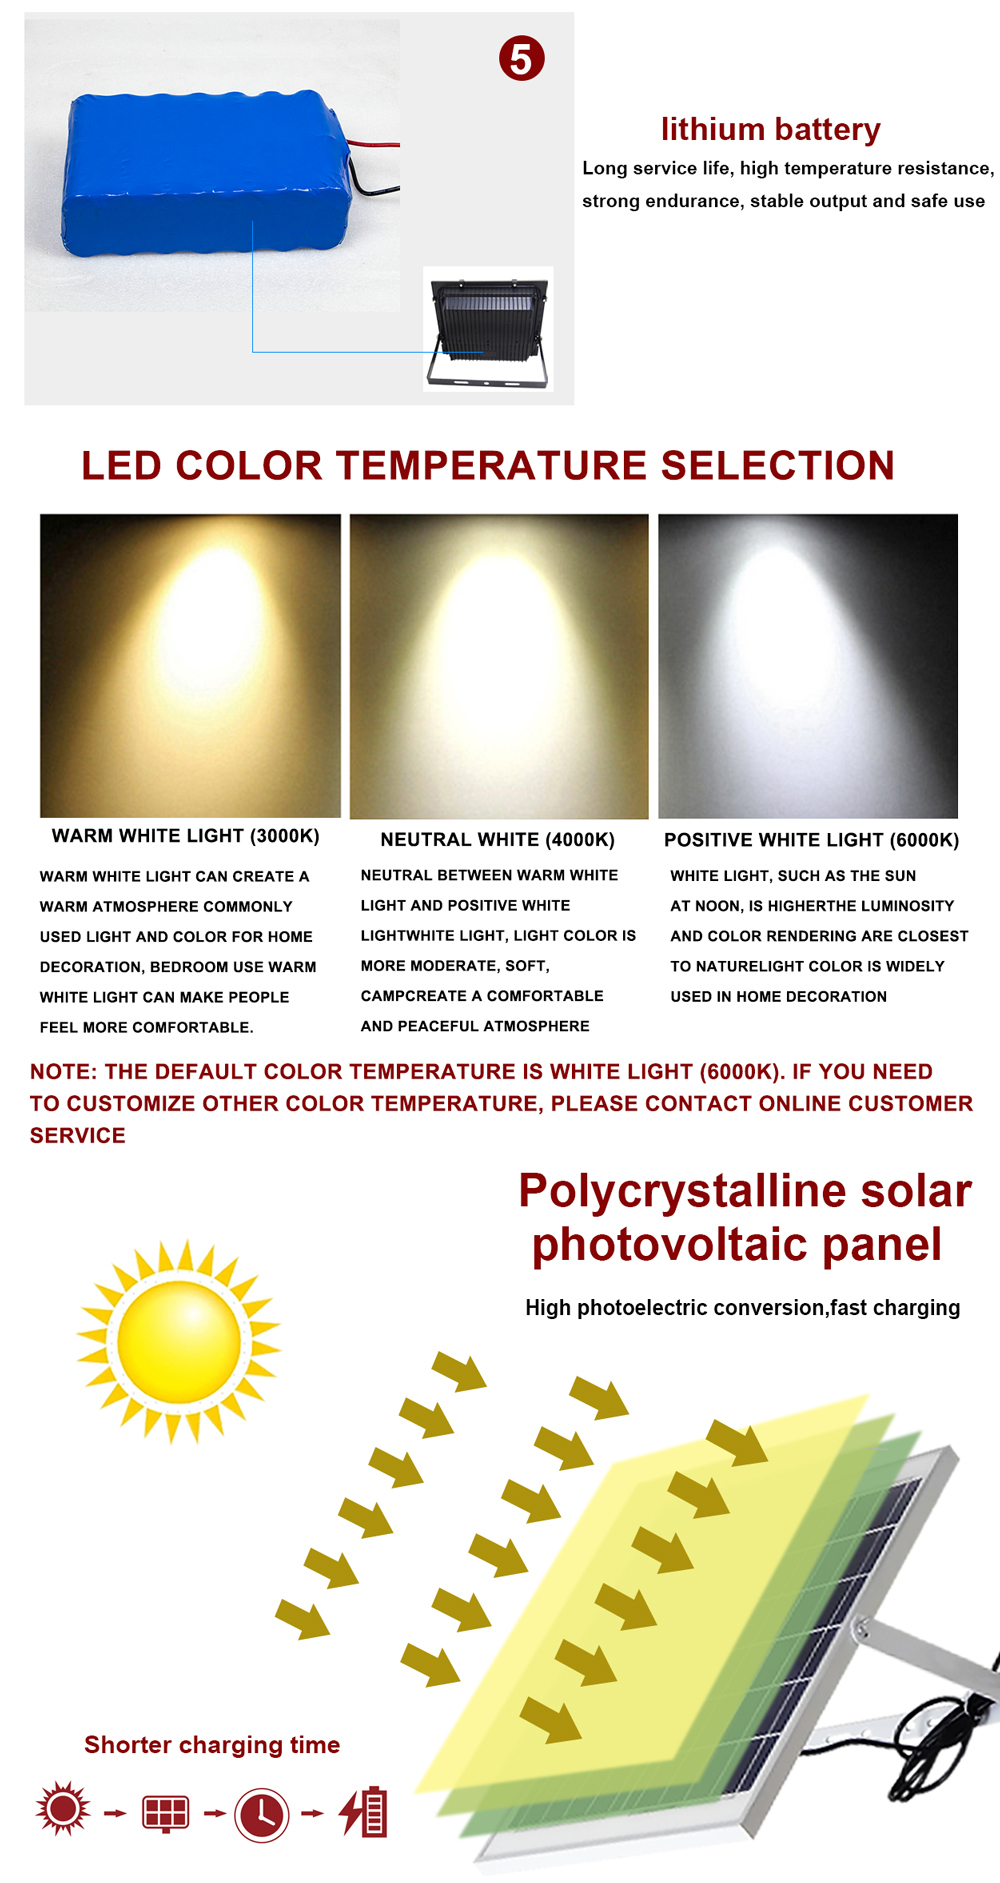 Best selling aluminum reflector polysilicon solar panels courtyard outdoor 25w 40w 60w 100w 200w 300w solar flood light